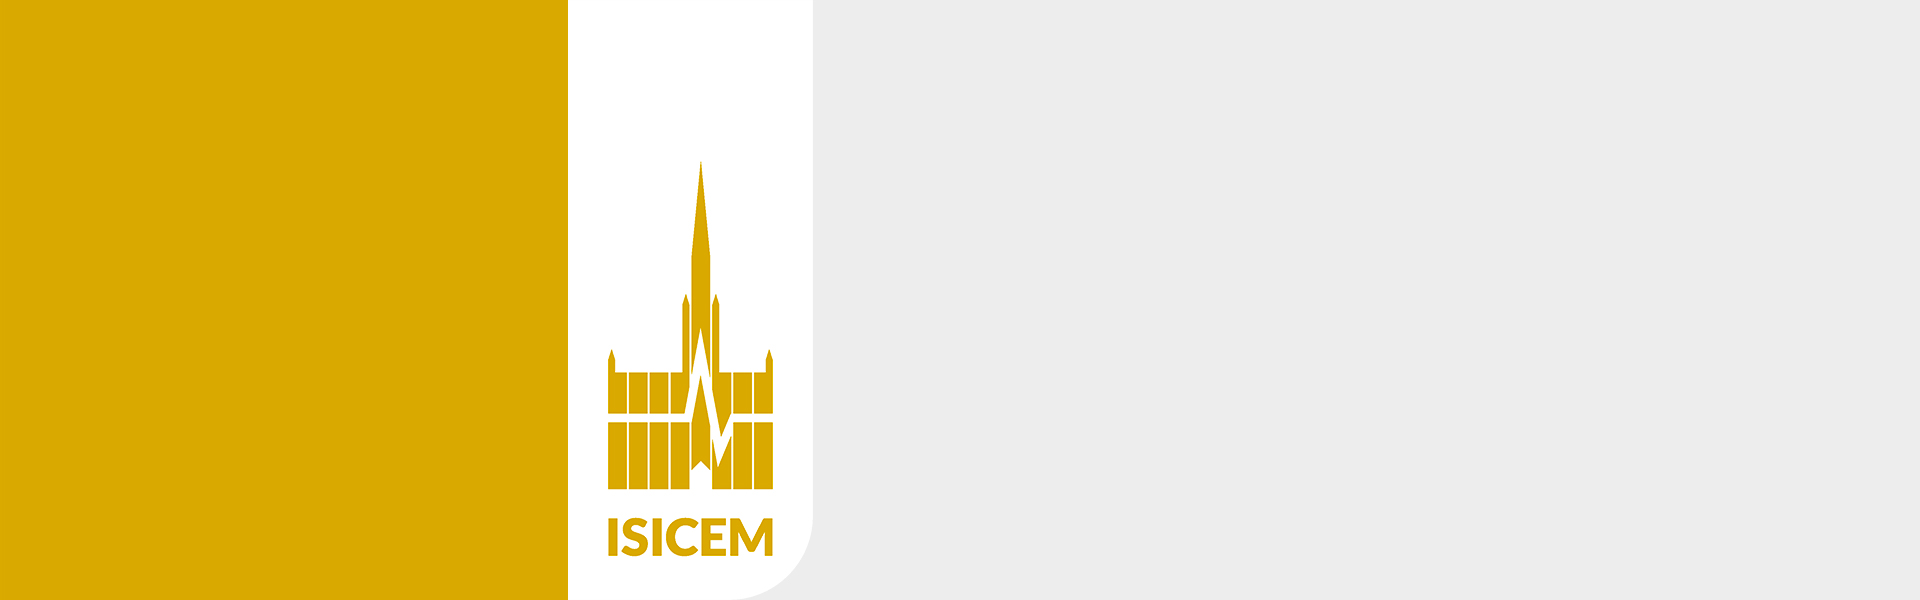 e-ISICEM 2020: virtual meeting